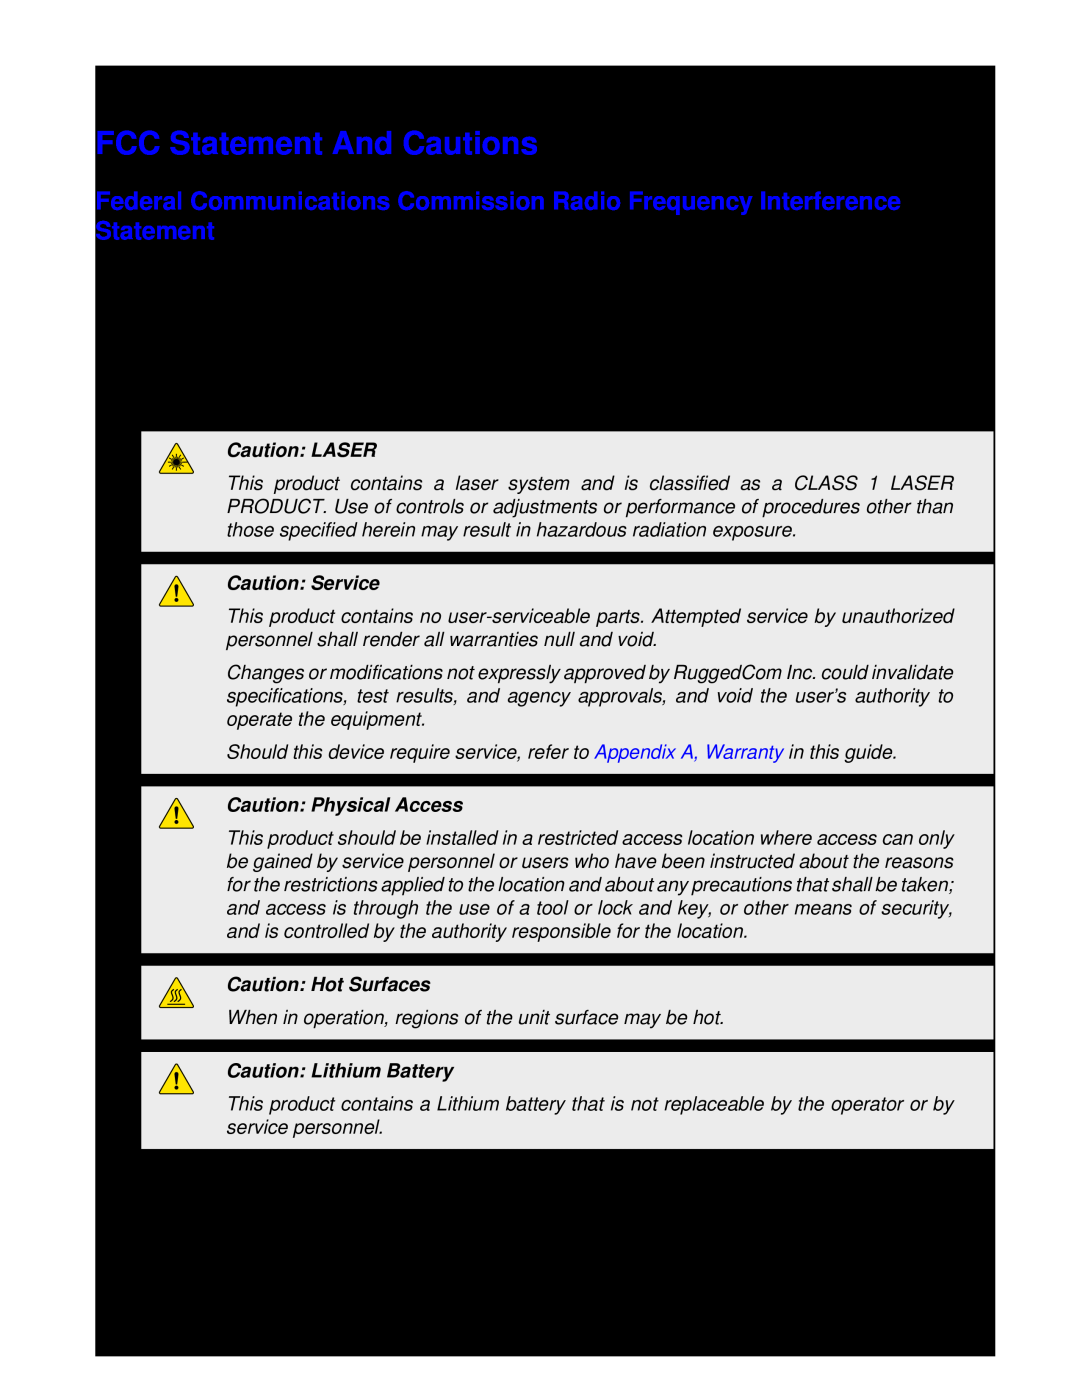 RuggedCom RS900GP manual FCC Statement And Cautions, Caution LASER, Caution Service, Caution Physical Access 